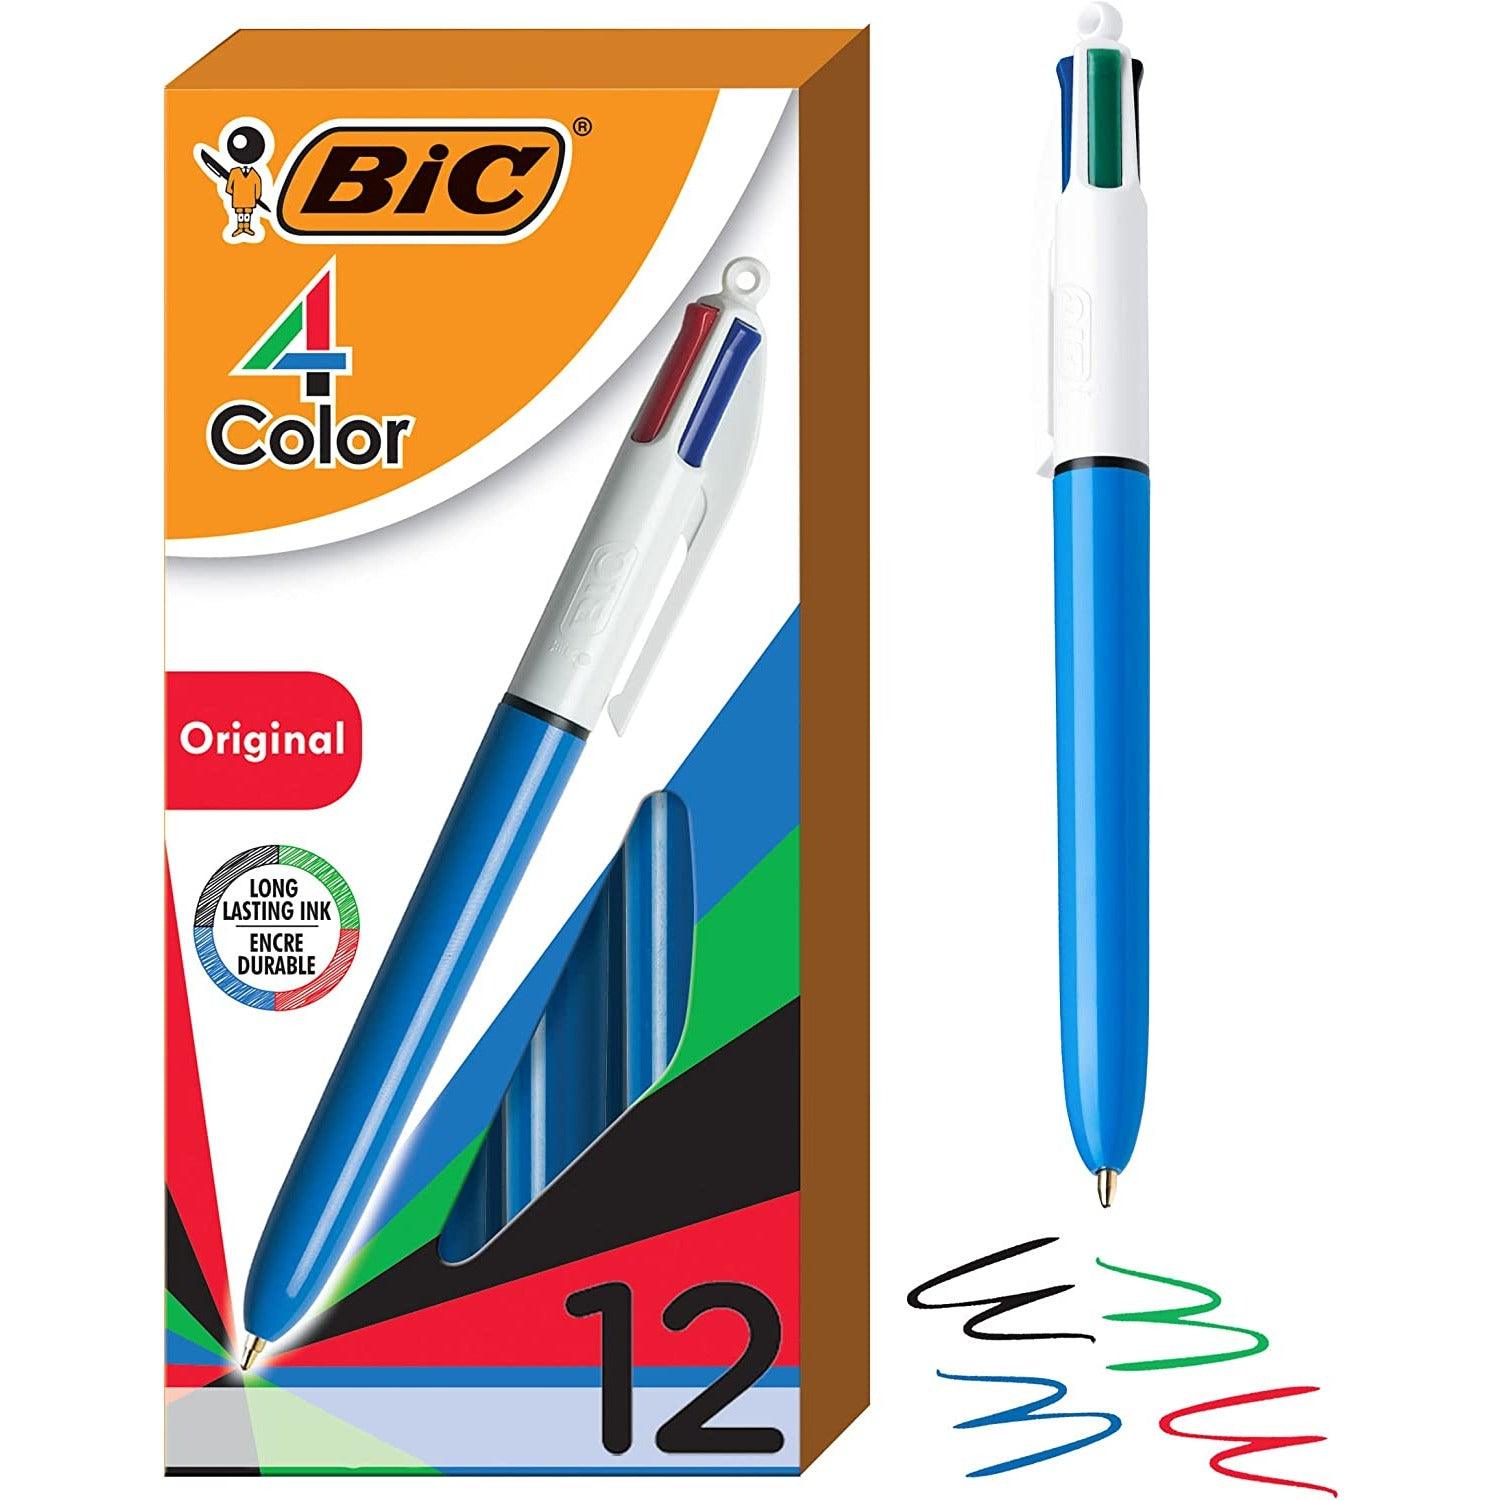 BIC 4-Color Original Retractable Ball Pens, Medium Point (1.0mm), 12-Count Pack